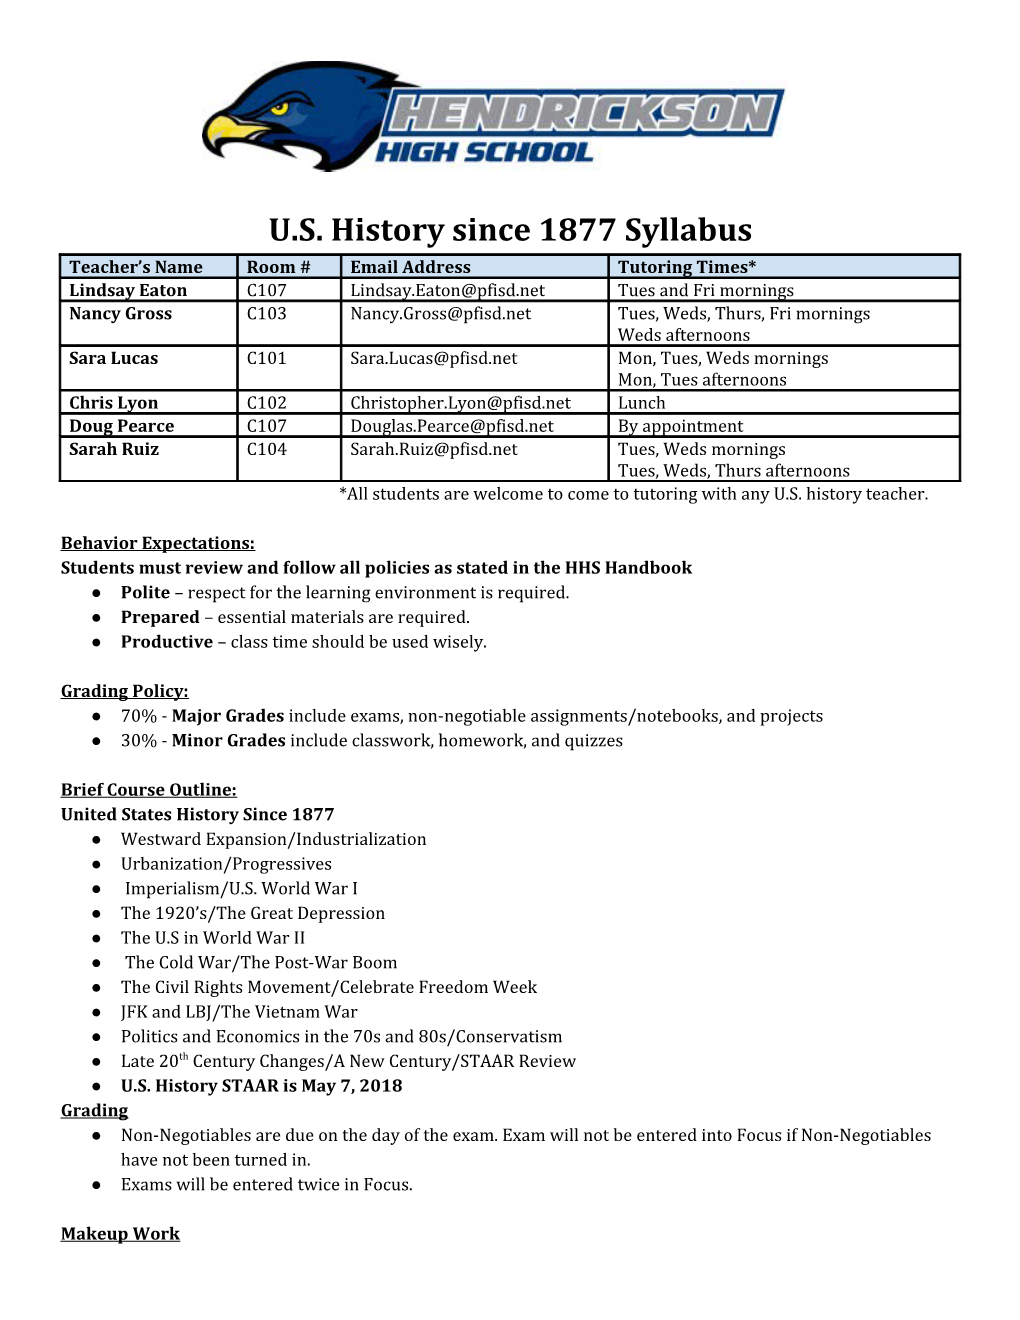 U.S. History Since 1877 Syllabus